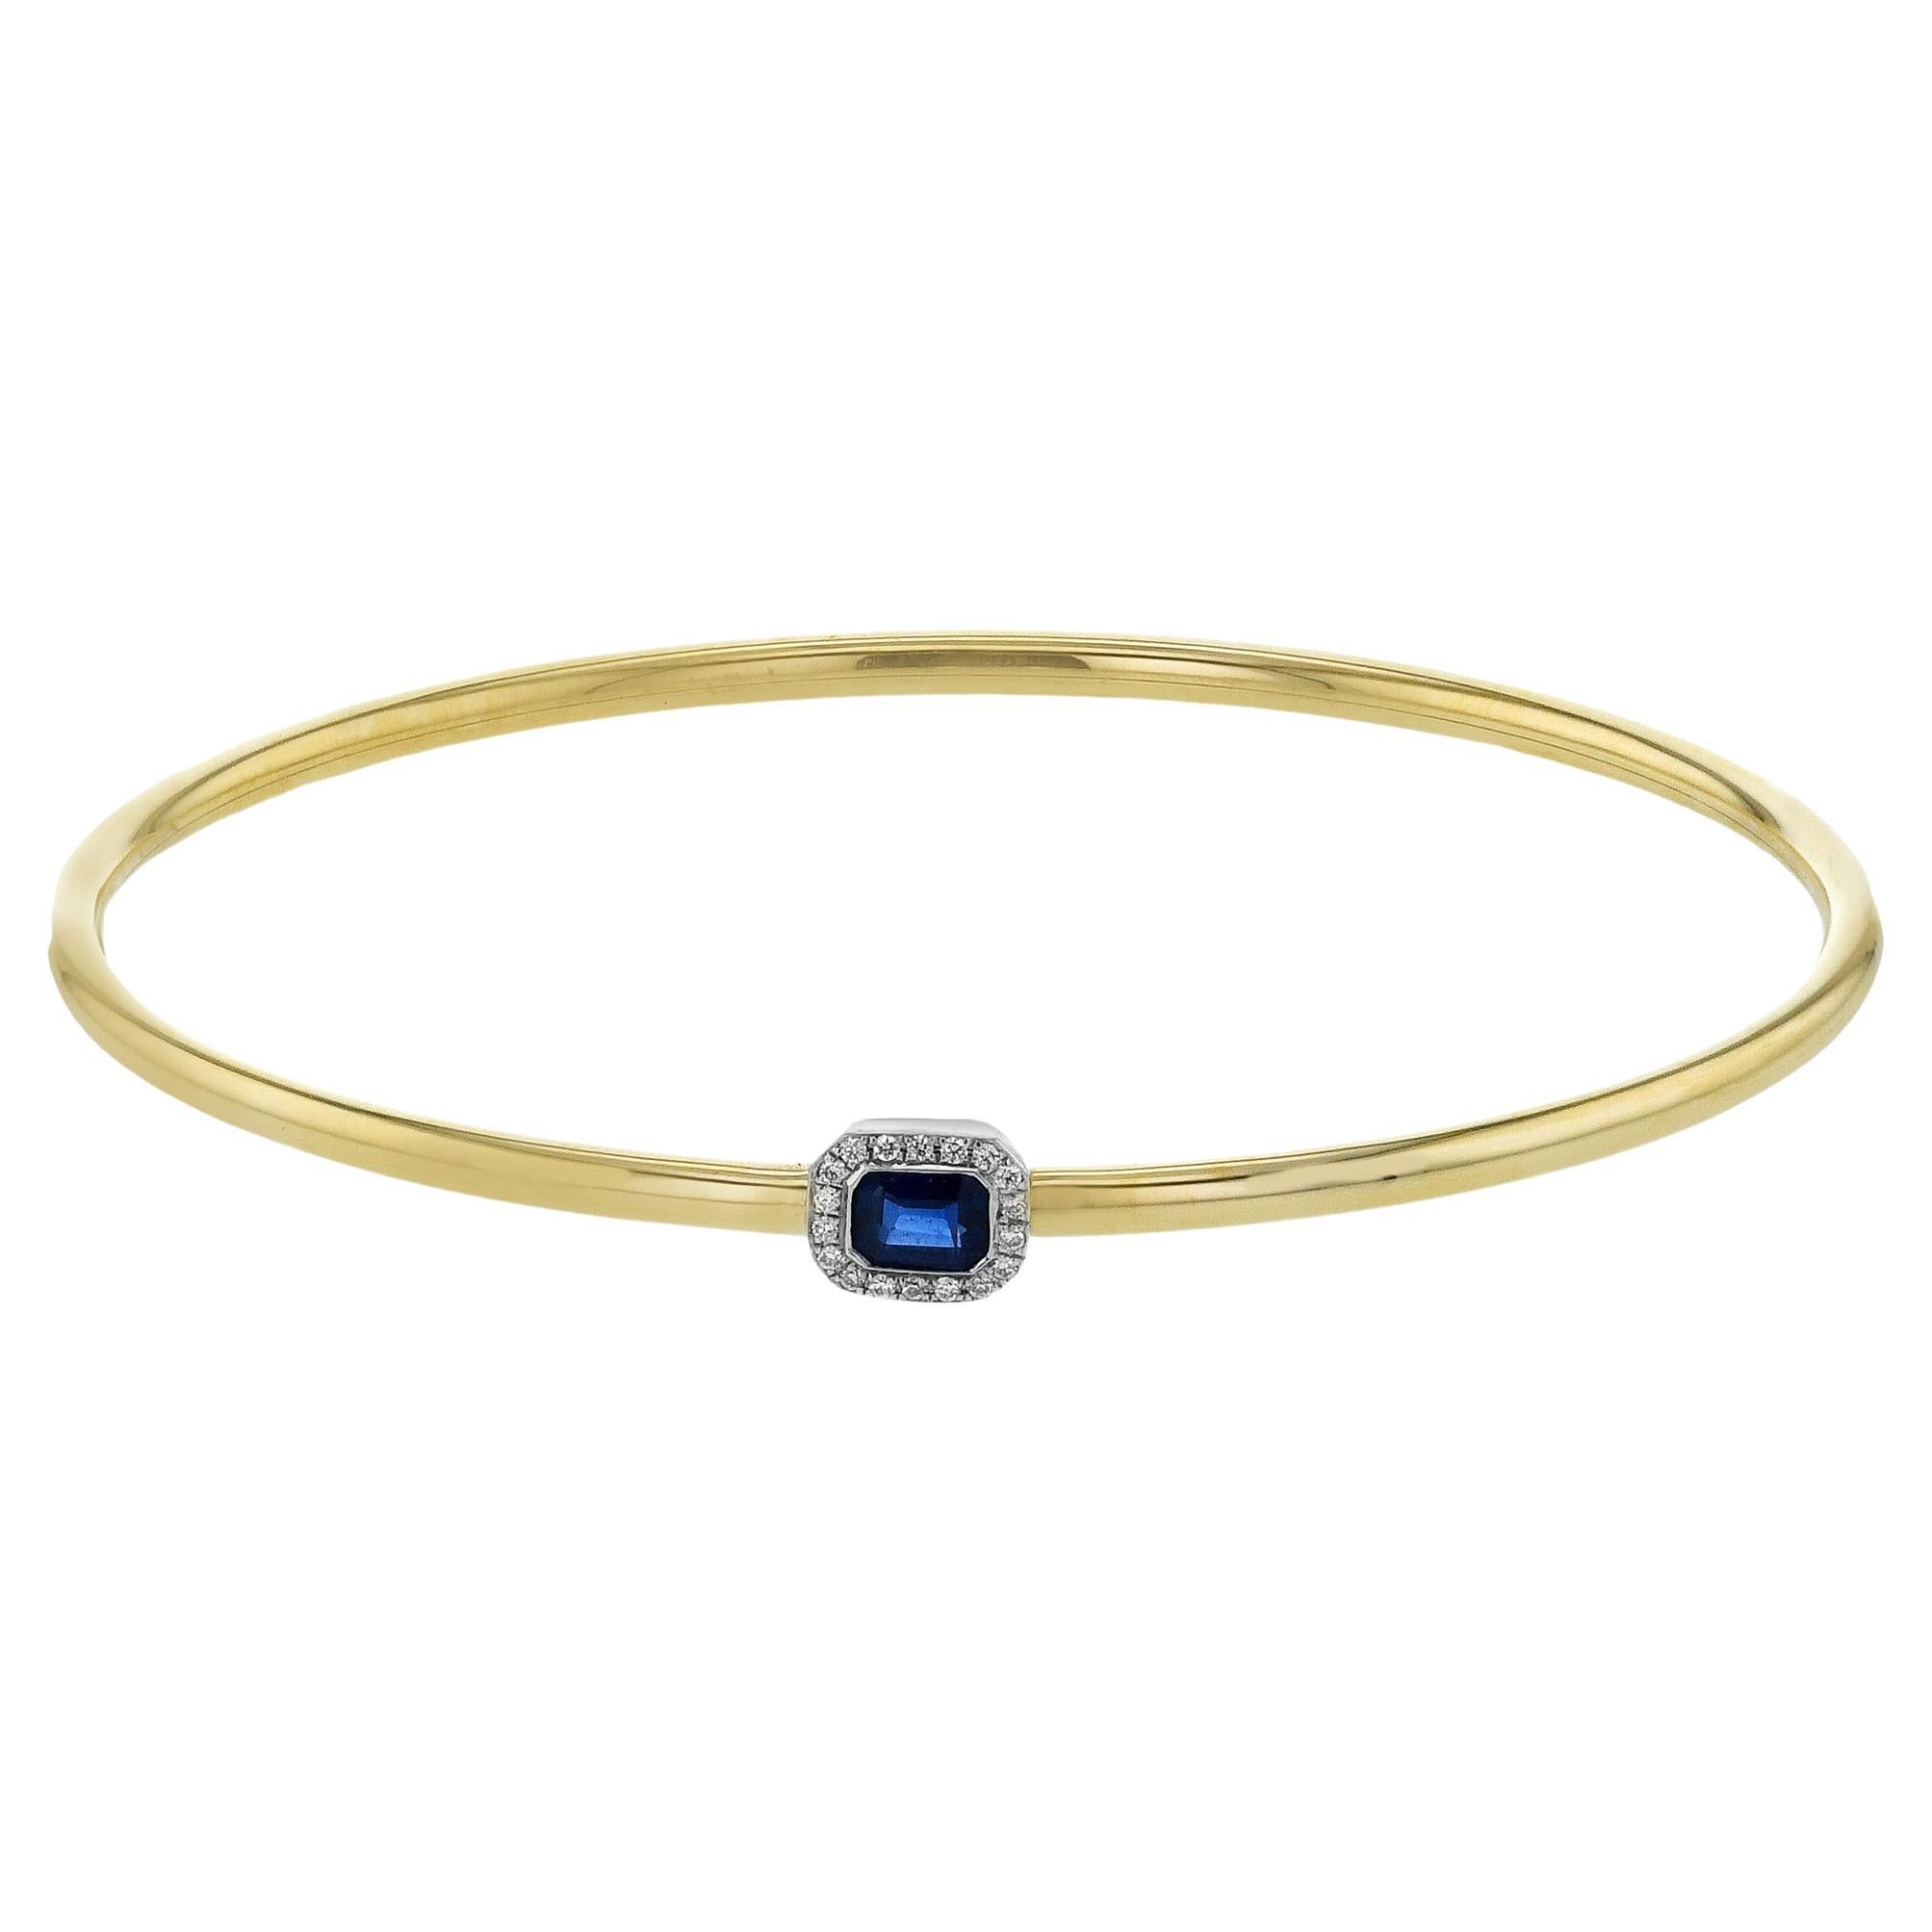 Simon G. 18K Gold Bangle Bracelet with Diamonds and Sapphire - LB2494